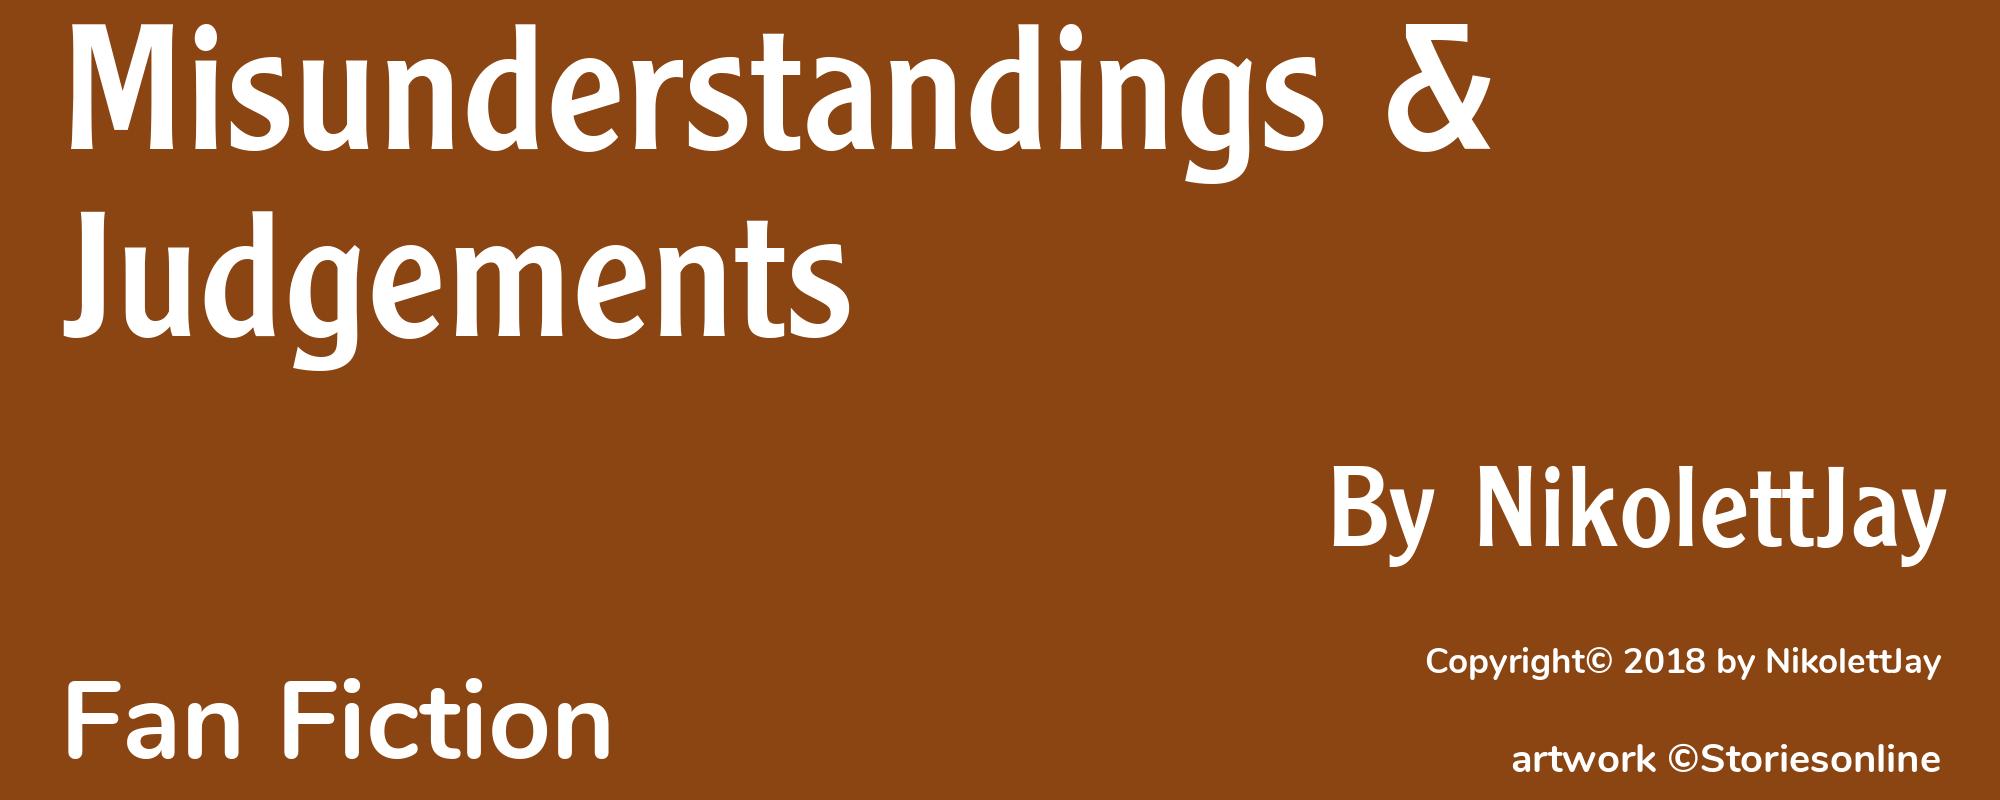 Misunderstandings & Judgements - Cover